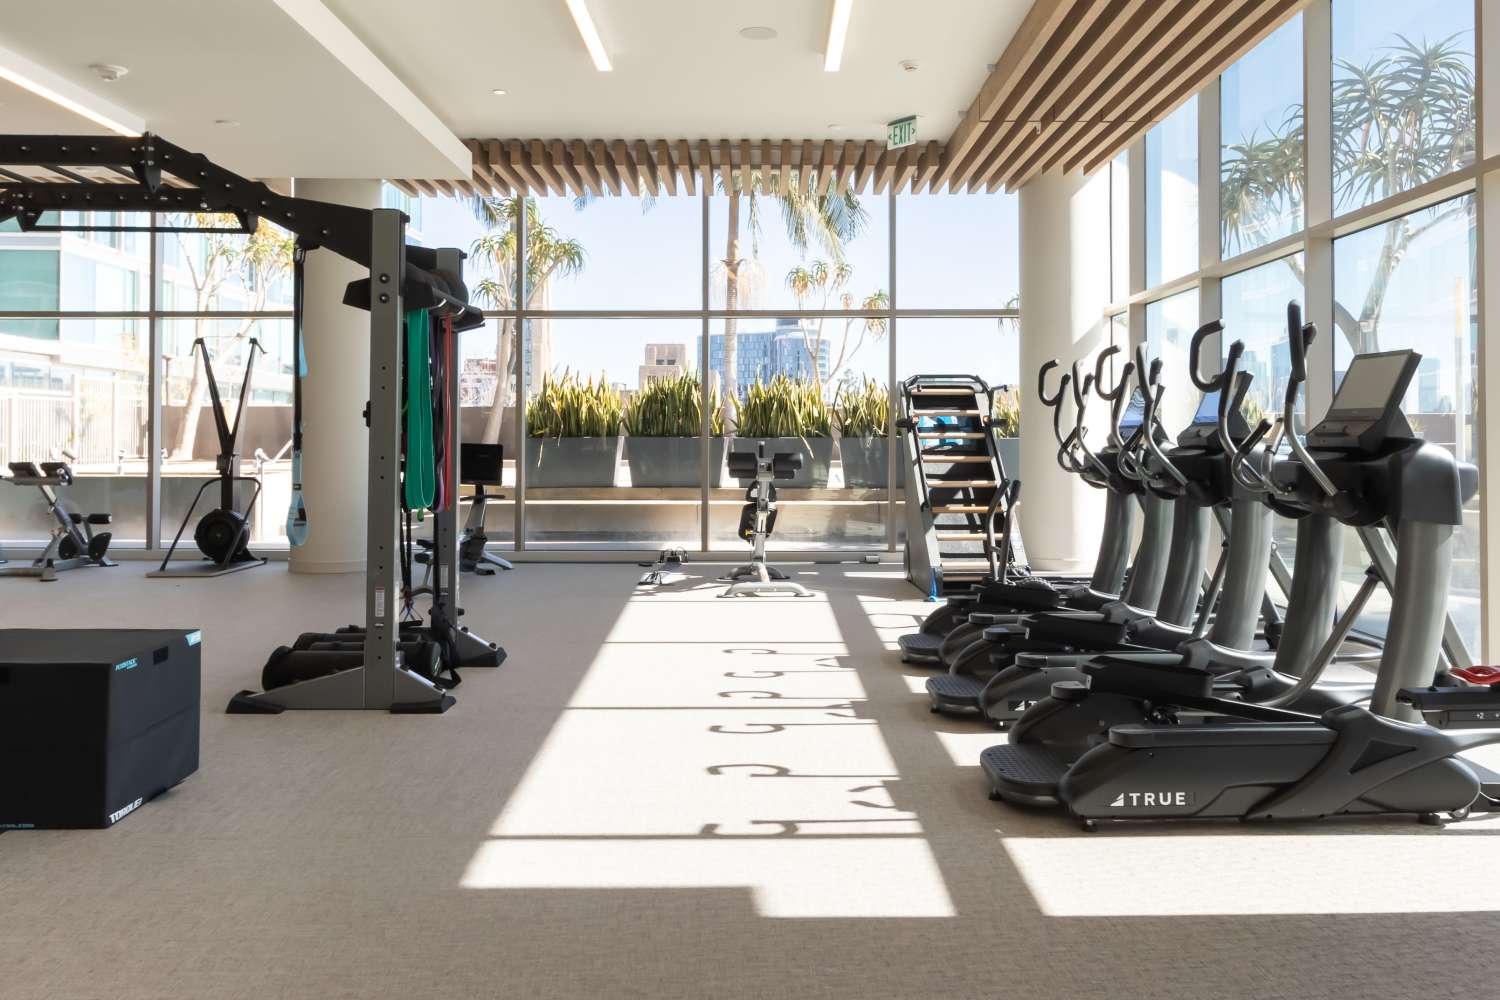 Fitness center at Nari in Los Angeles, California